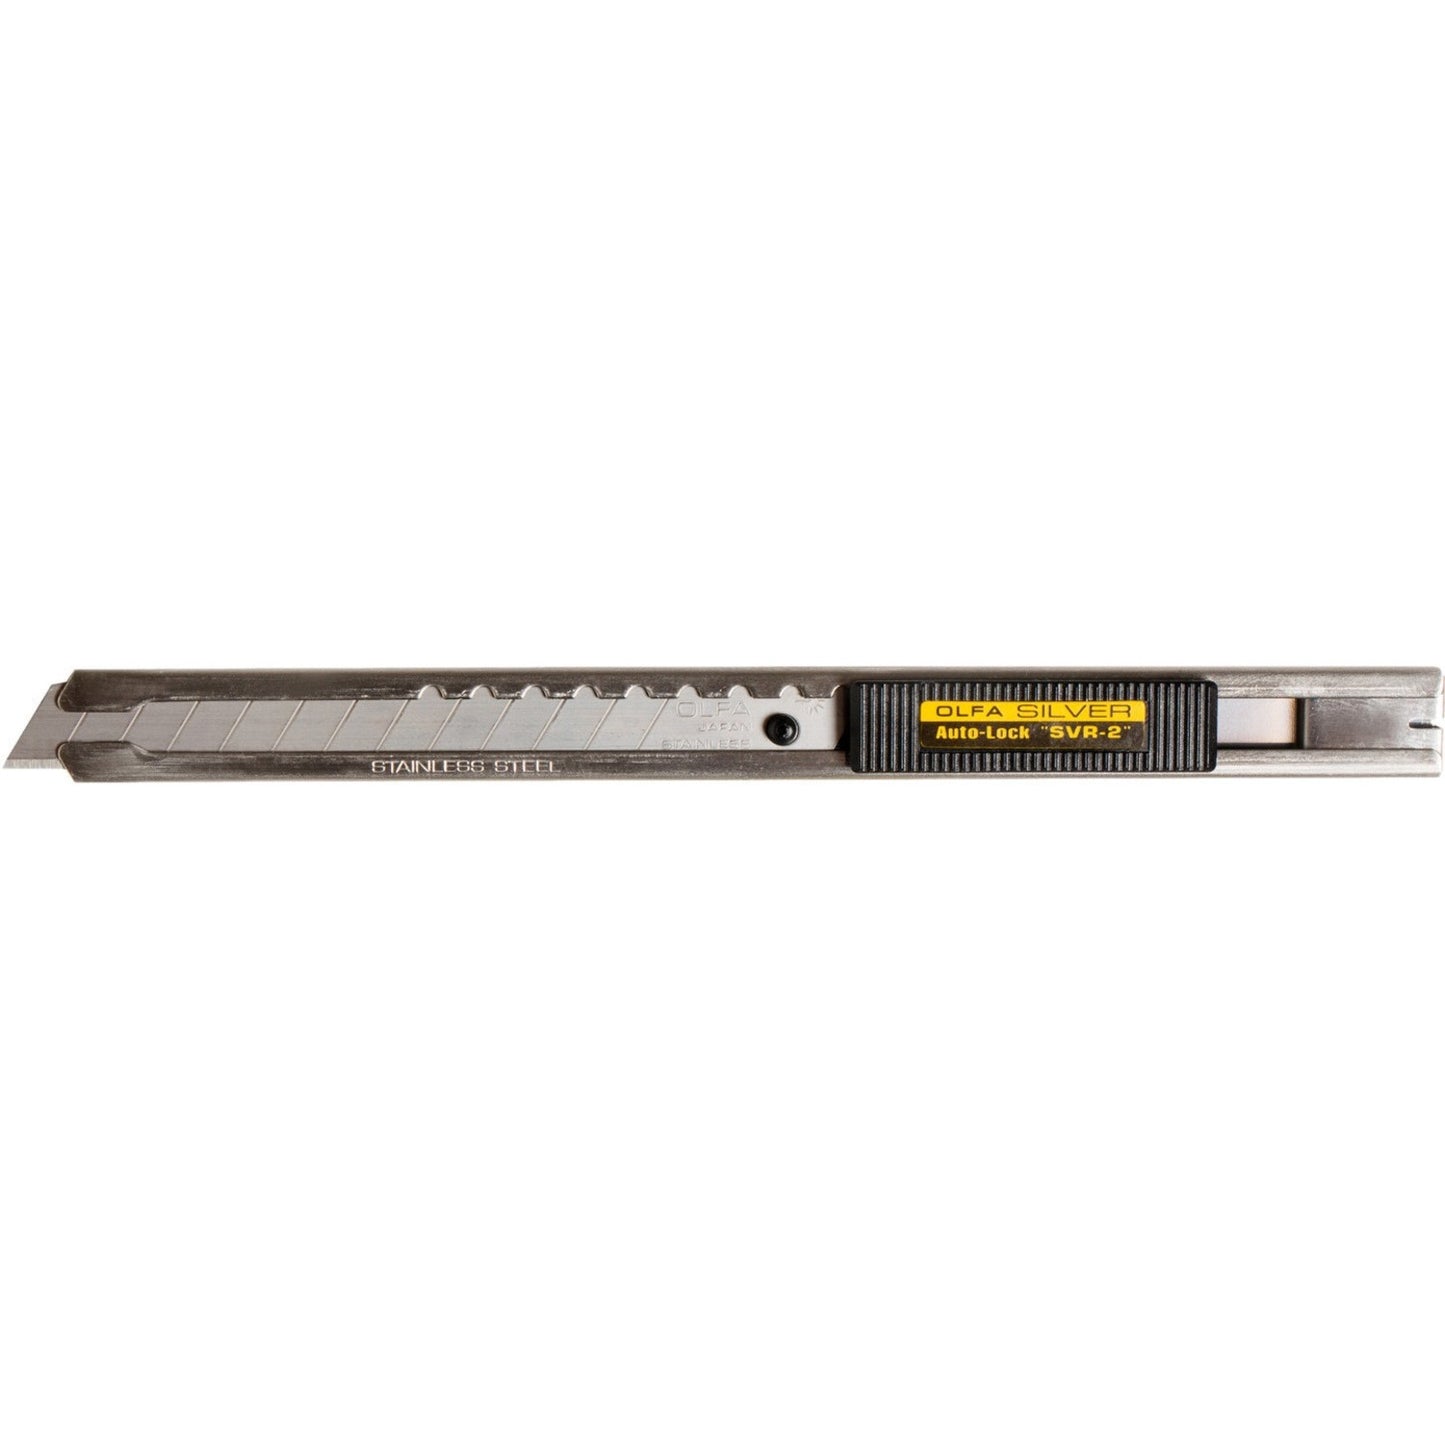 Olfa 9mm Stainless Steel Auto-Lock Precision Knife (SVR-2)